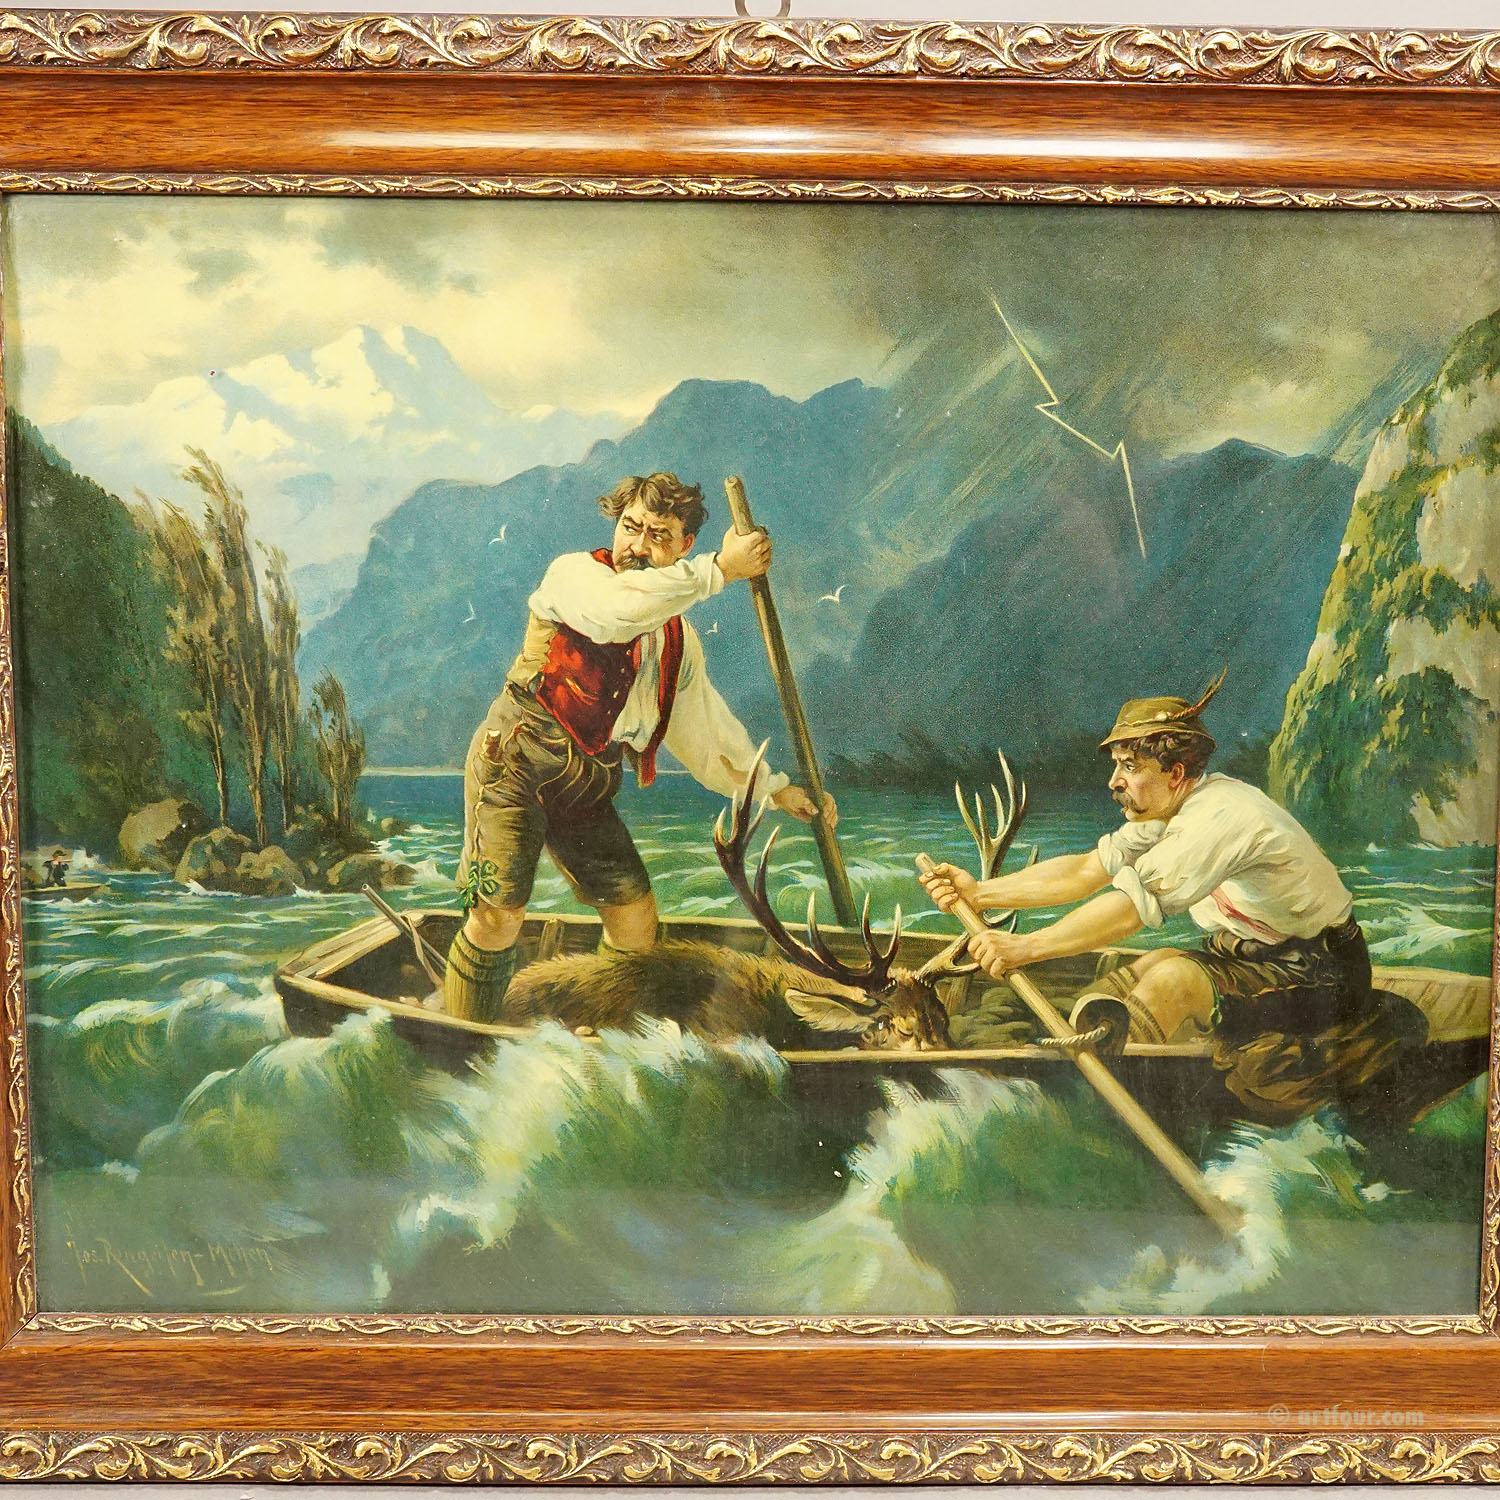 Antique Oil Print with Dramatic Poacher Scene after Josef Ringeisen